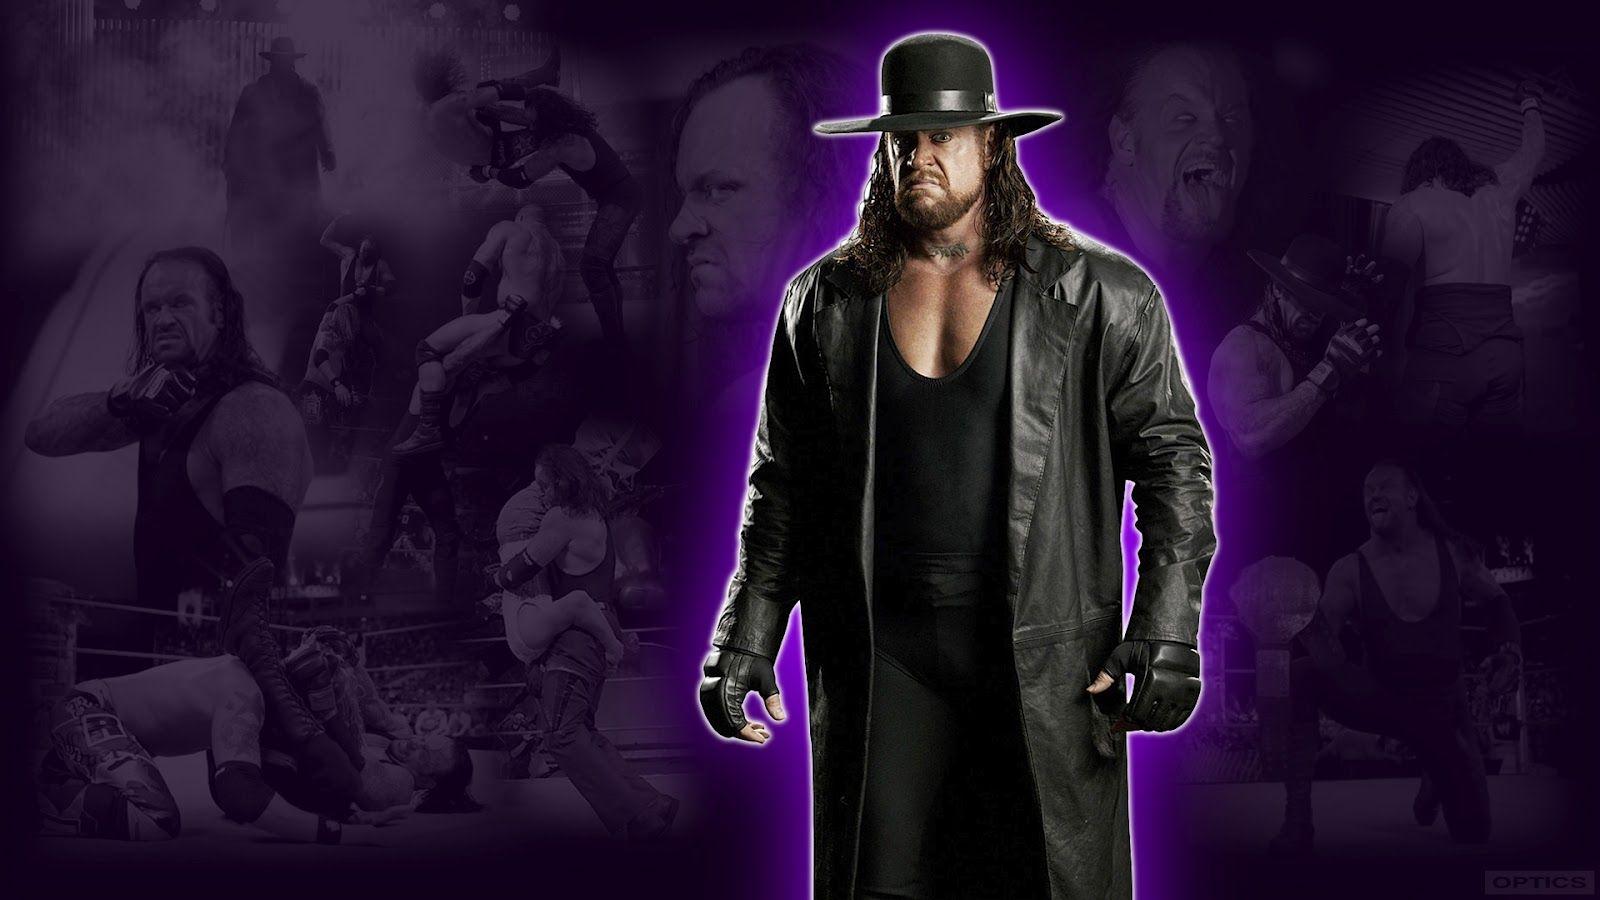 WWE WALLPAPERS: The Undertaker. Undertaker Wallpaper. Undertaker